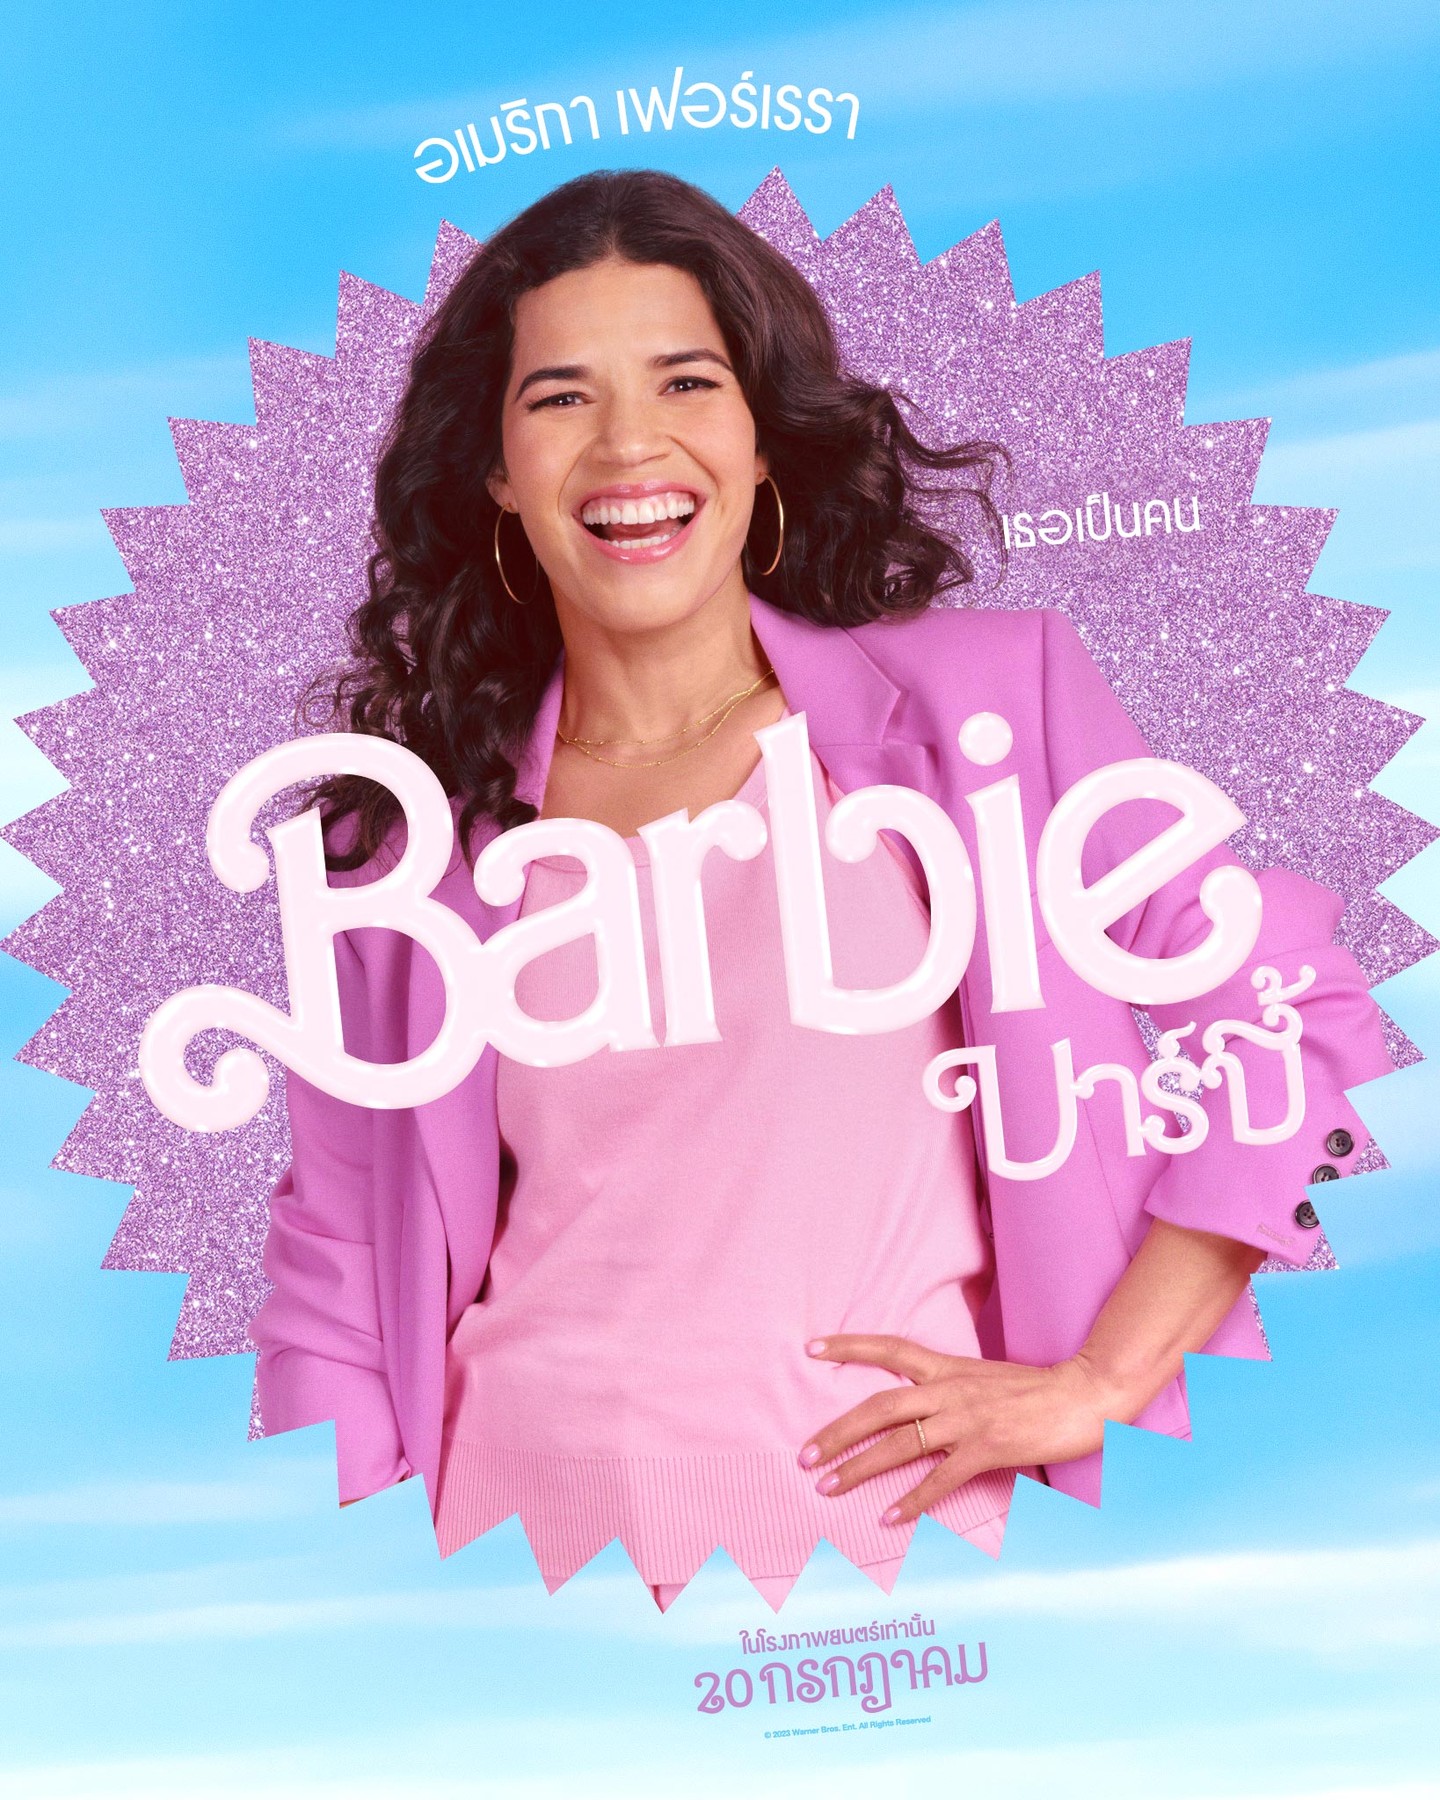 Barbie บาร์บี้